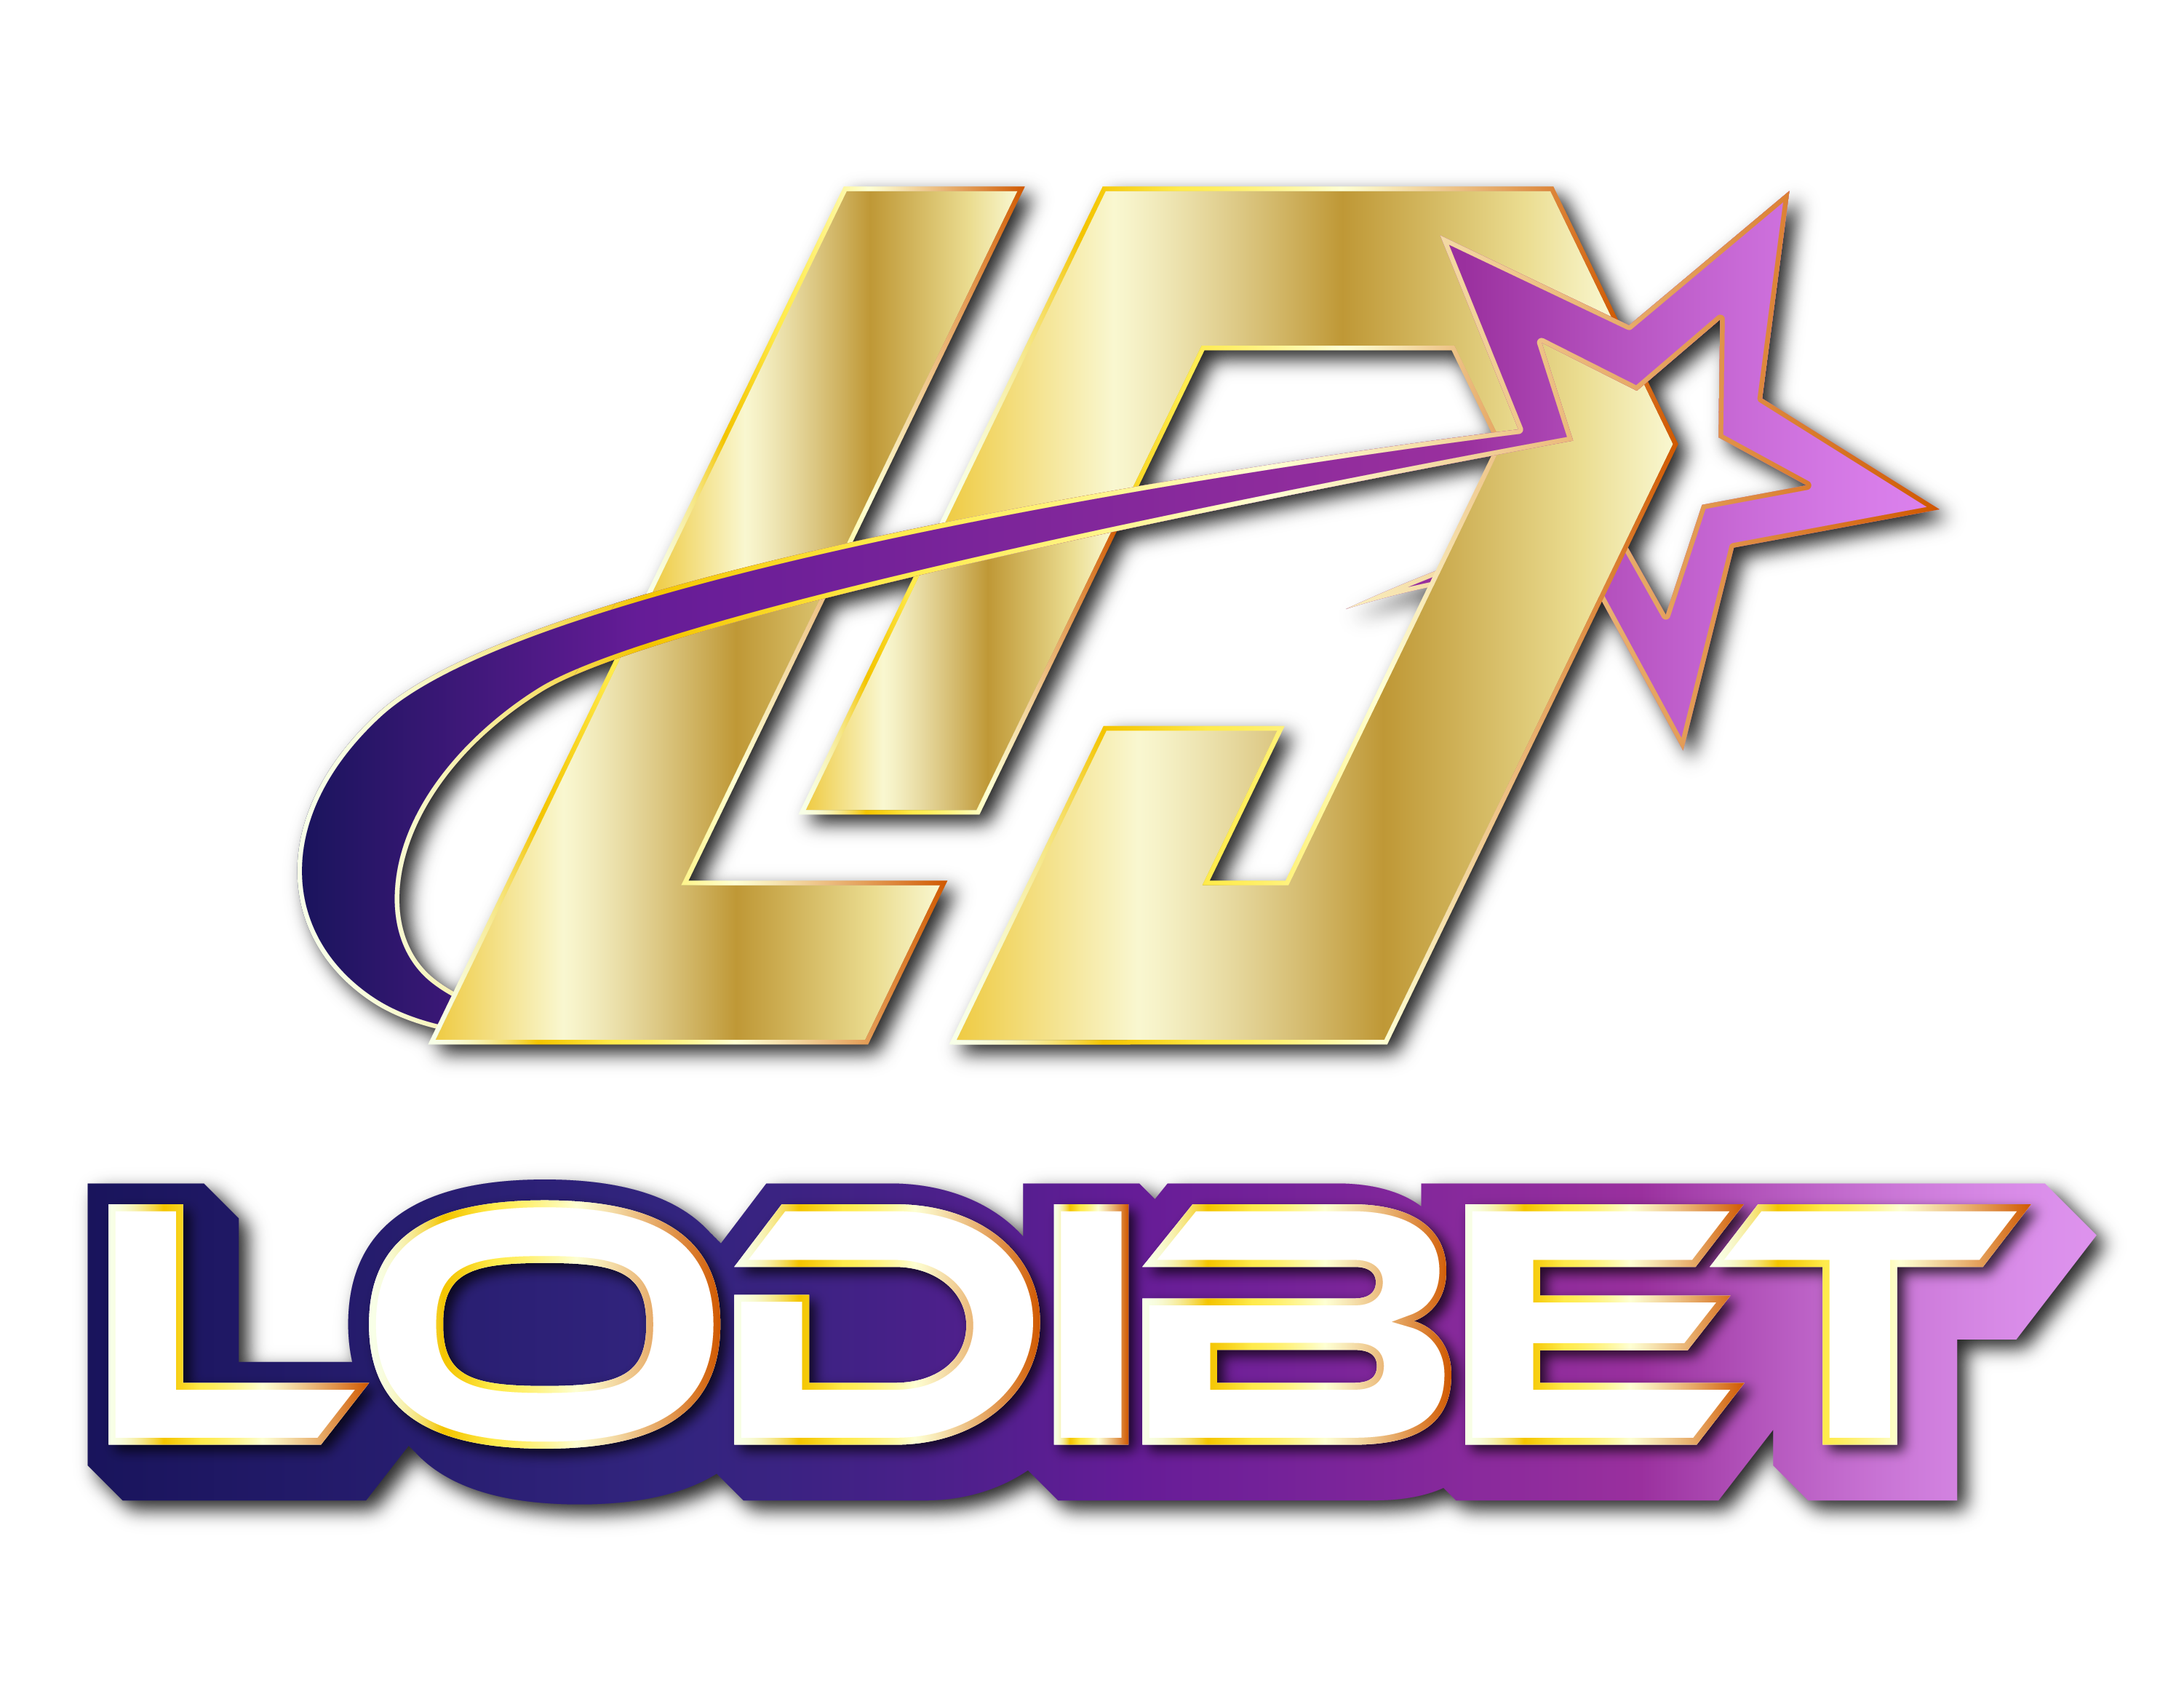 Lodibet Casino